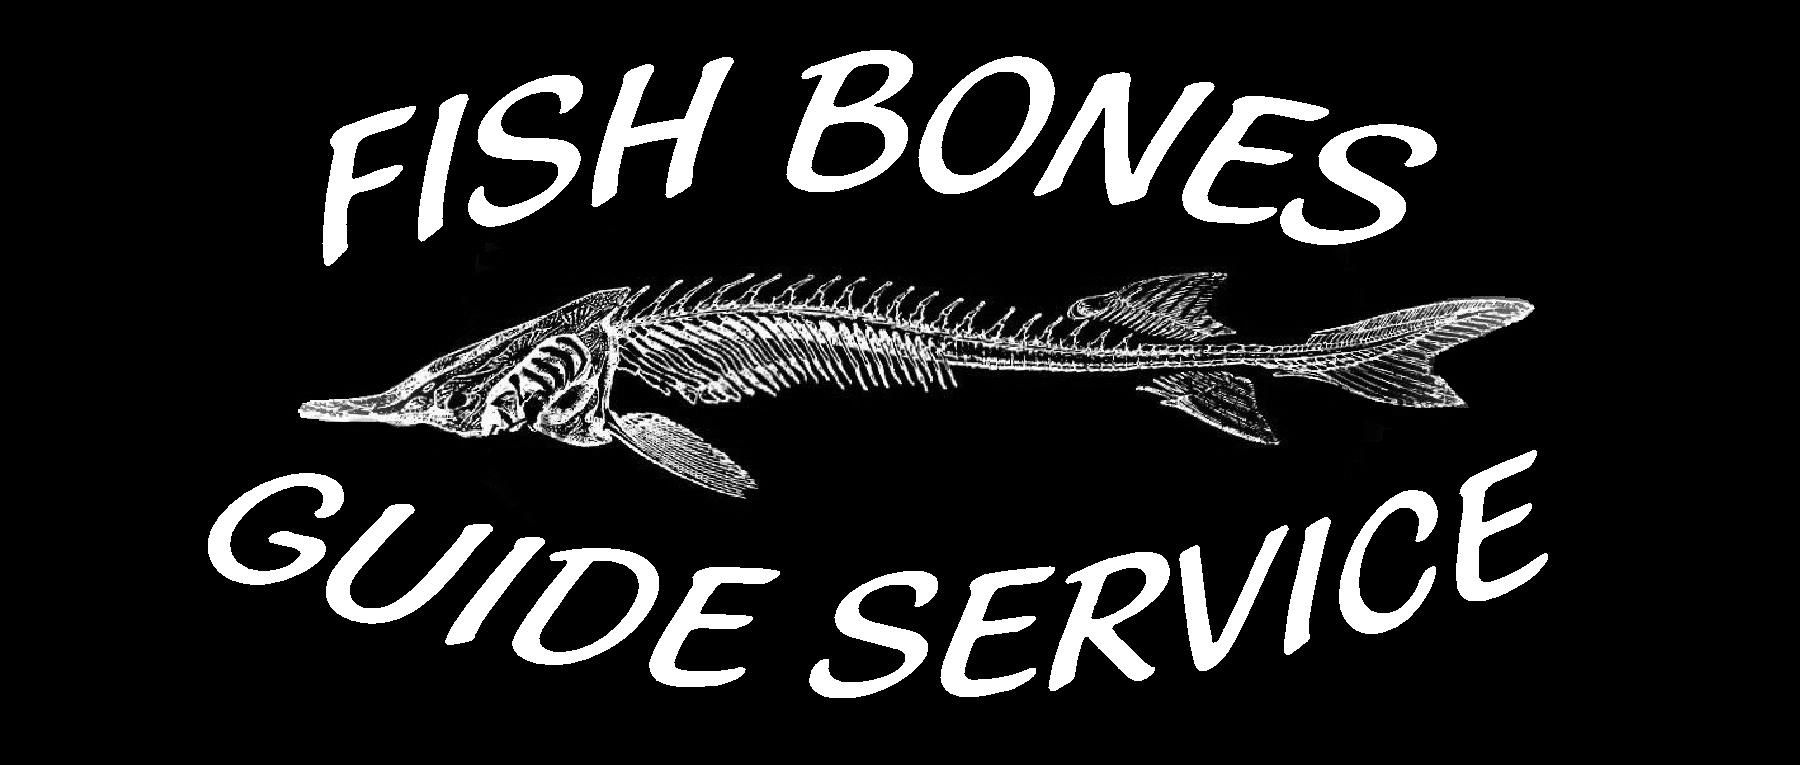 Wisconsin Dells Fishing Guide- Fish Bones Guide Service